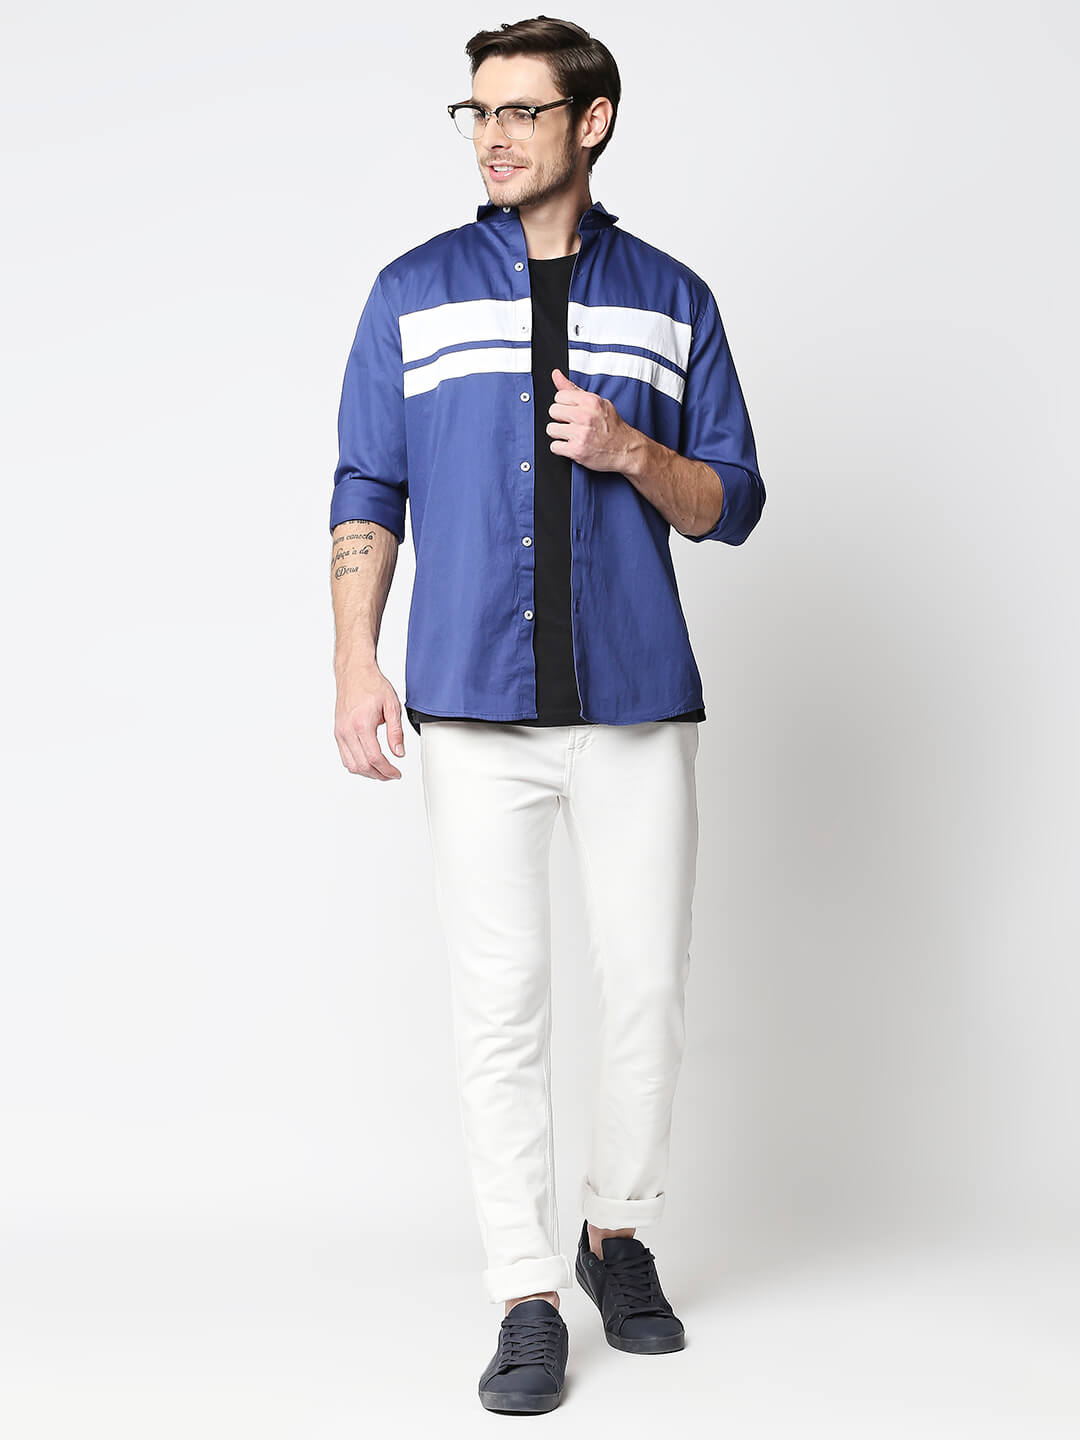 The Manaca Men Partywear Shirt - Blue & White Stripe